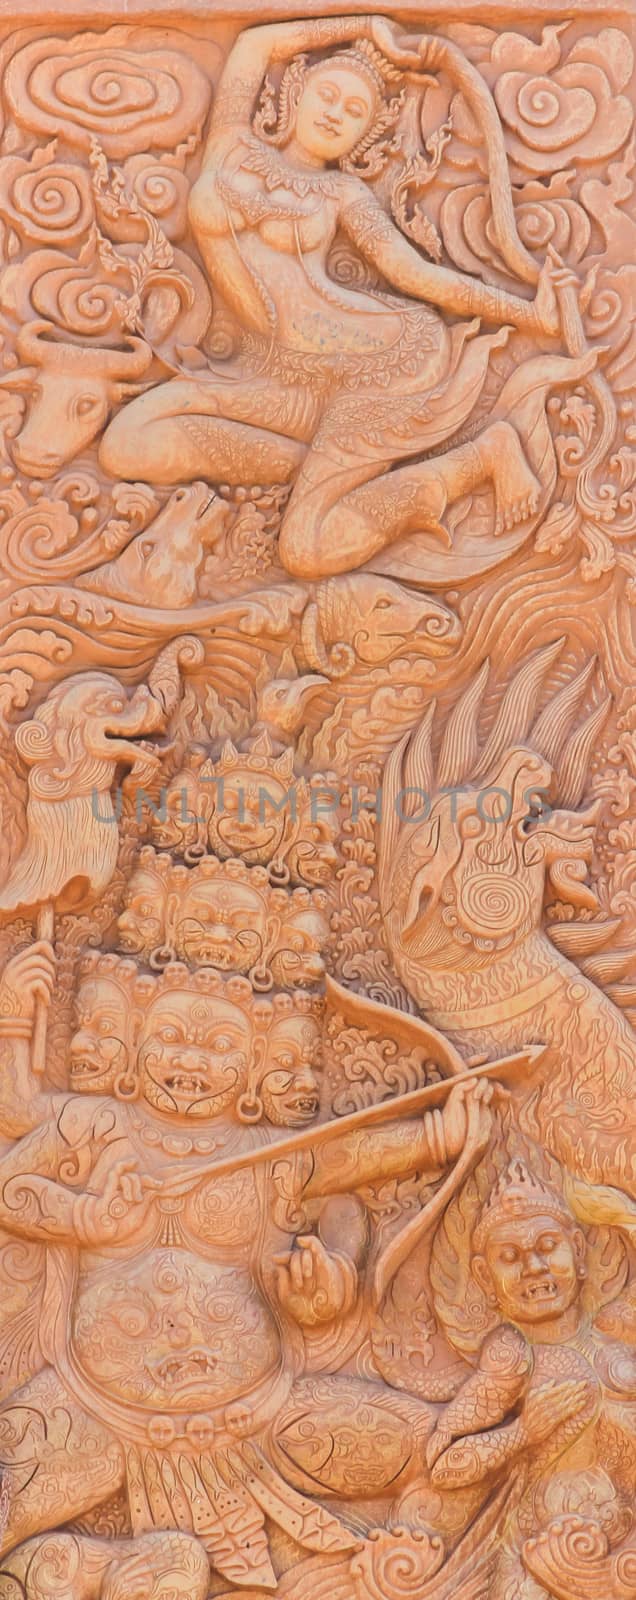 thai art on stone plate in Phasornkaew temple